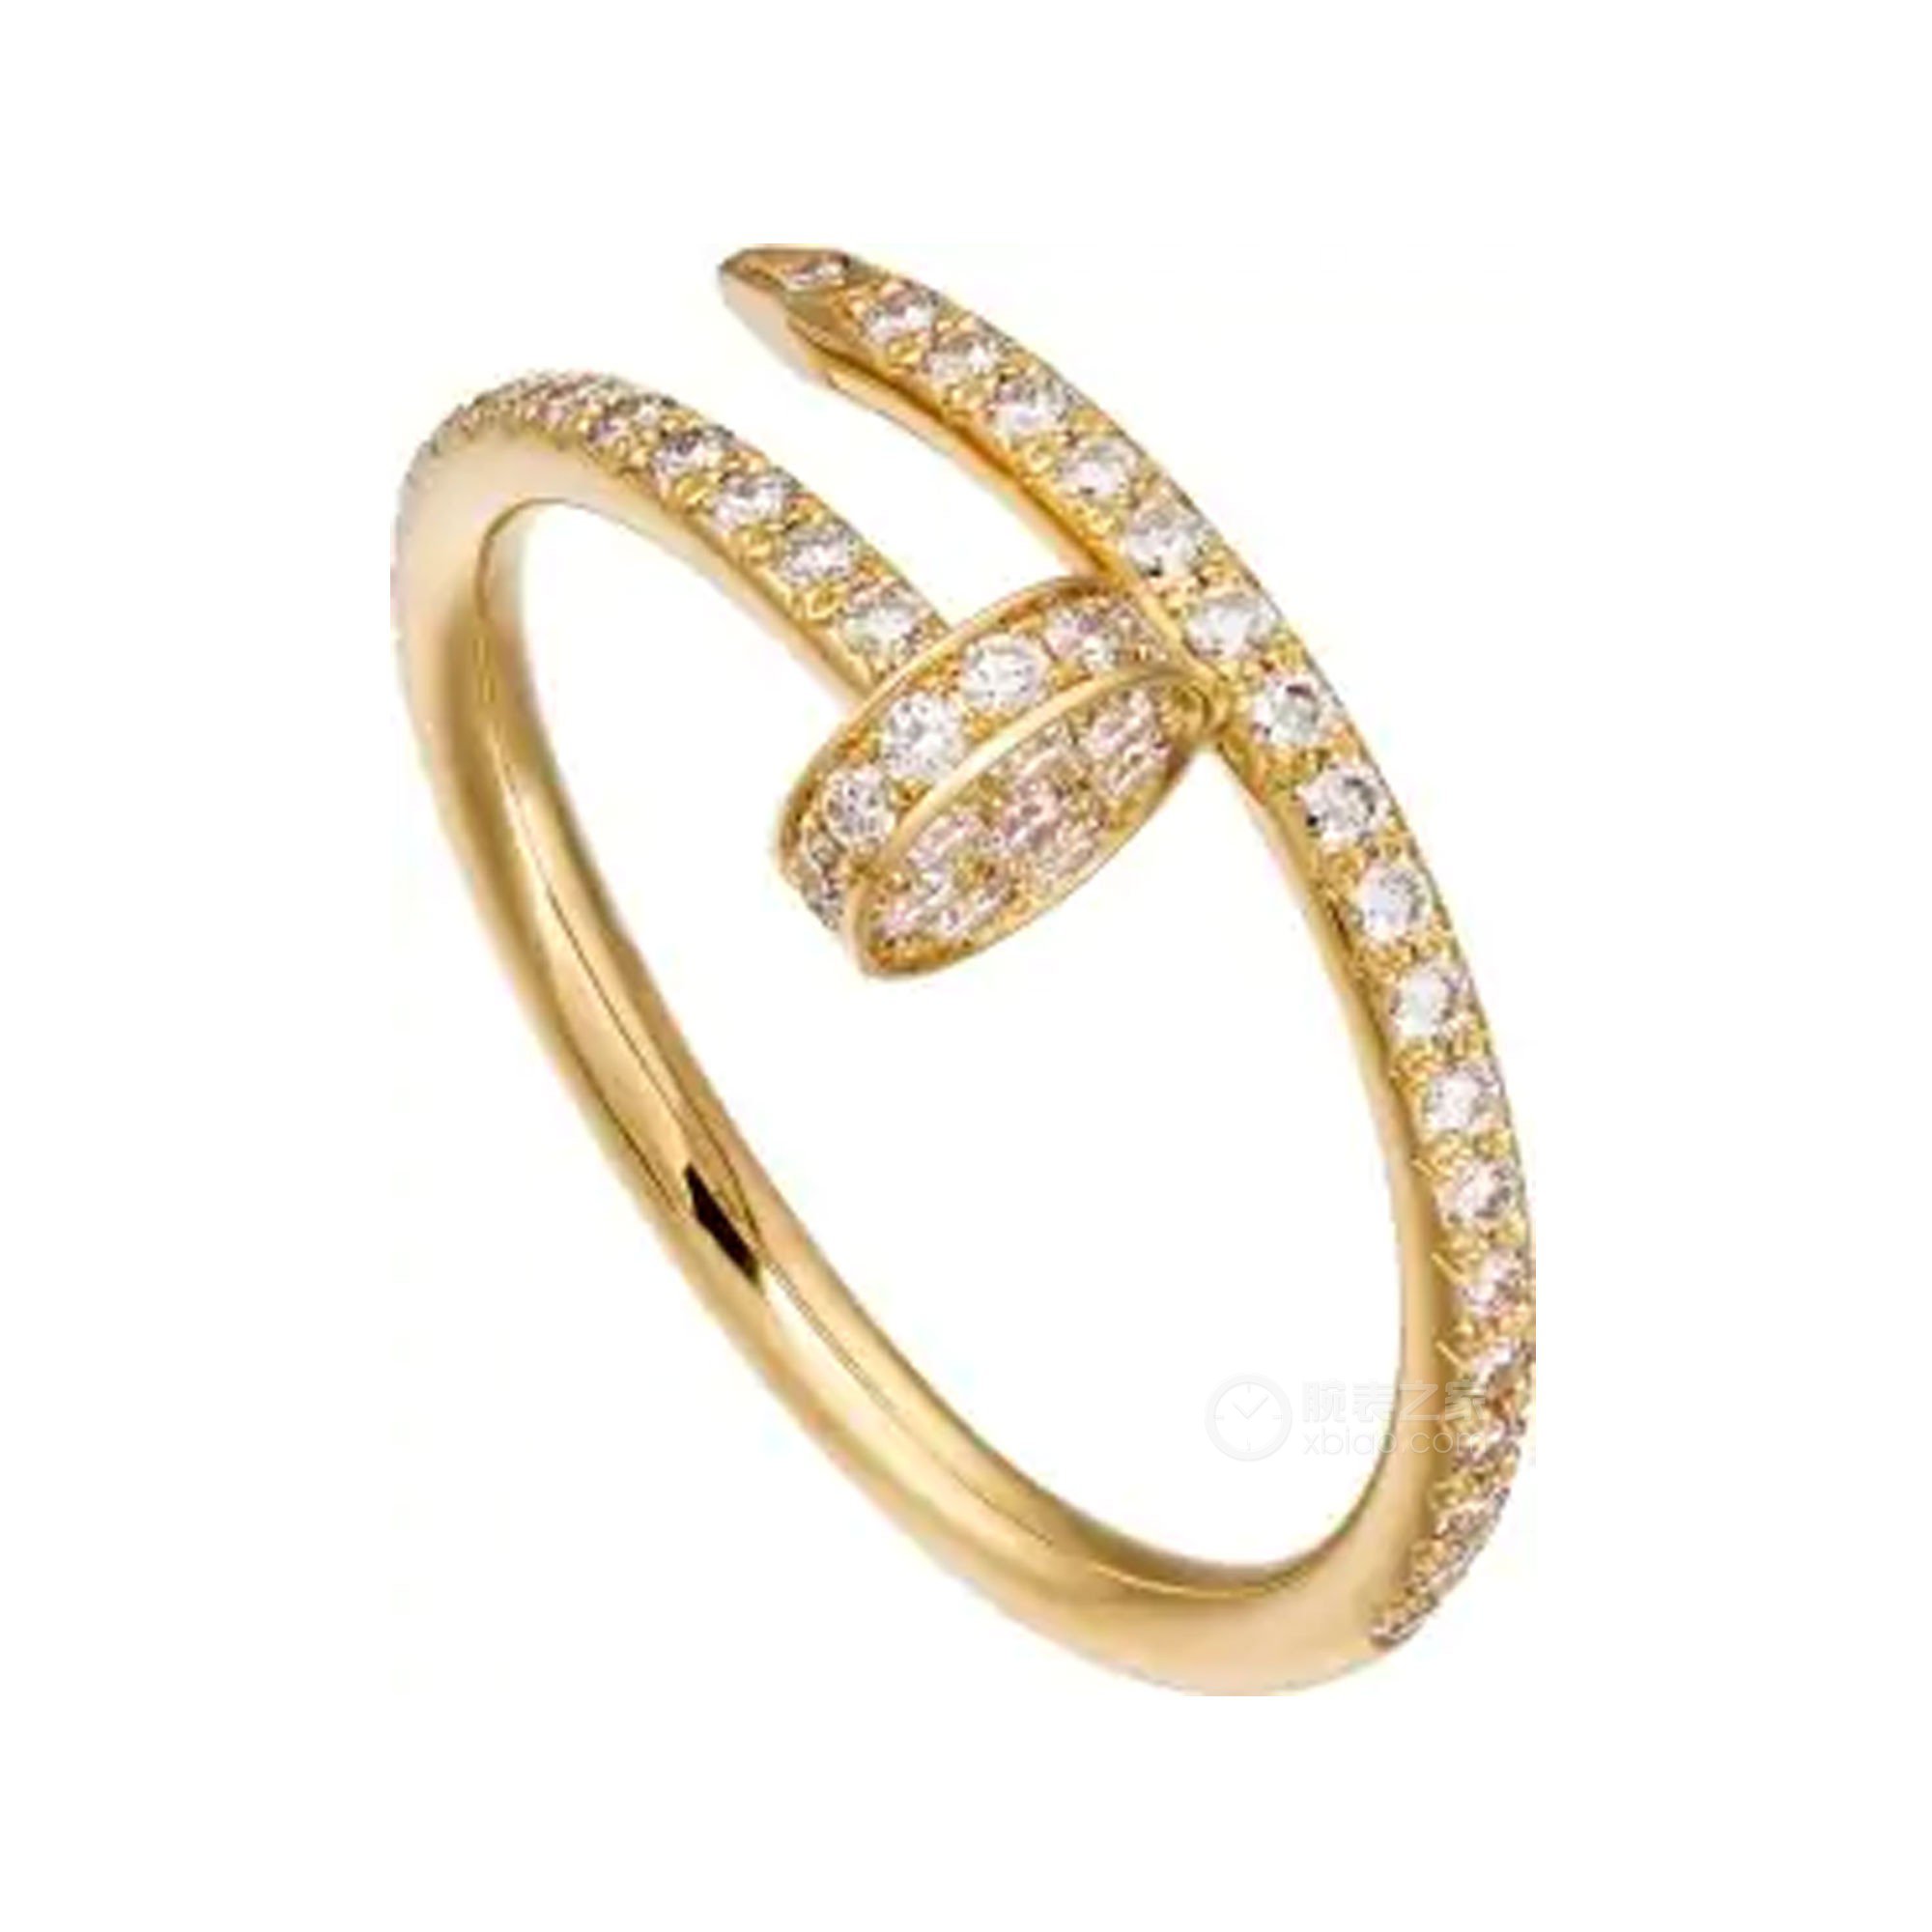 N4206800 - Ballerine订婚钻戒 铂金 - 铂金，钻石 - 卡地亚